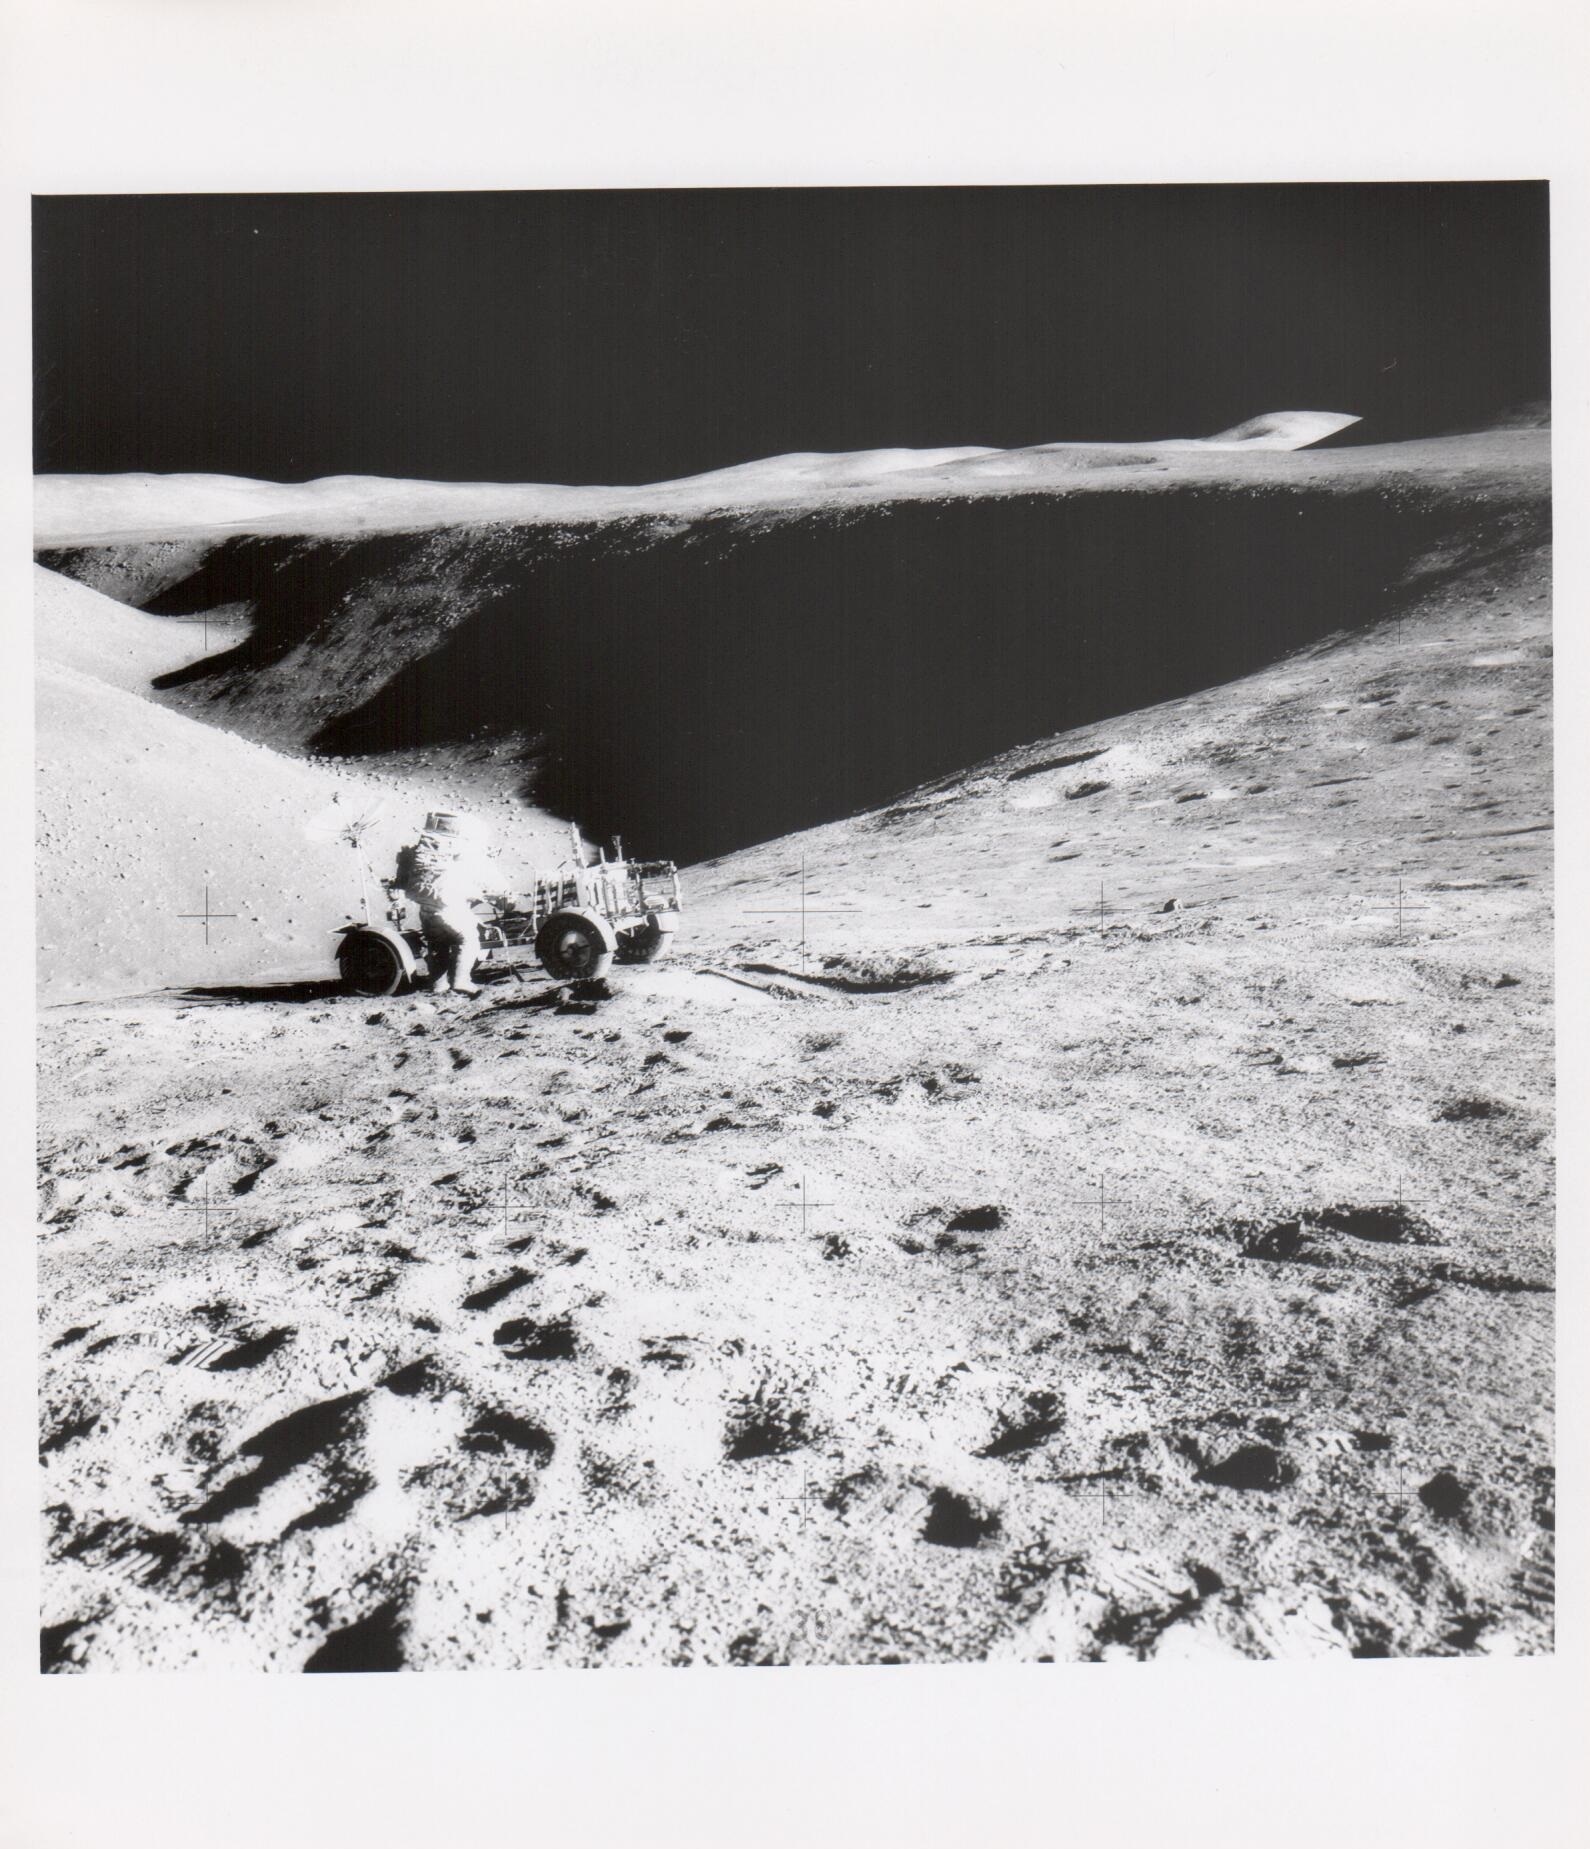 David Scott and the Lunar Rover, Apollo 15, August 1971